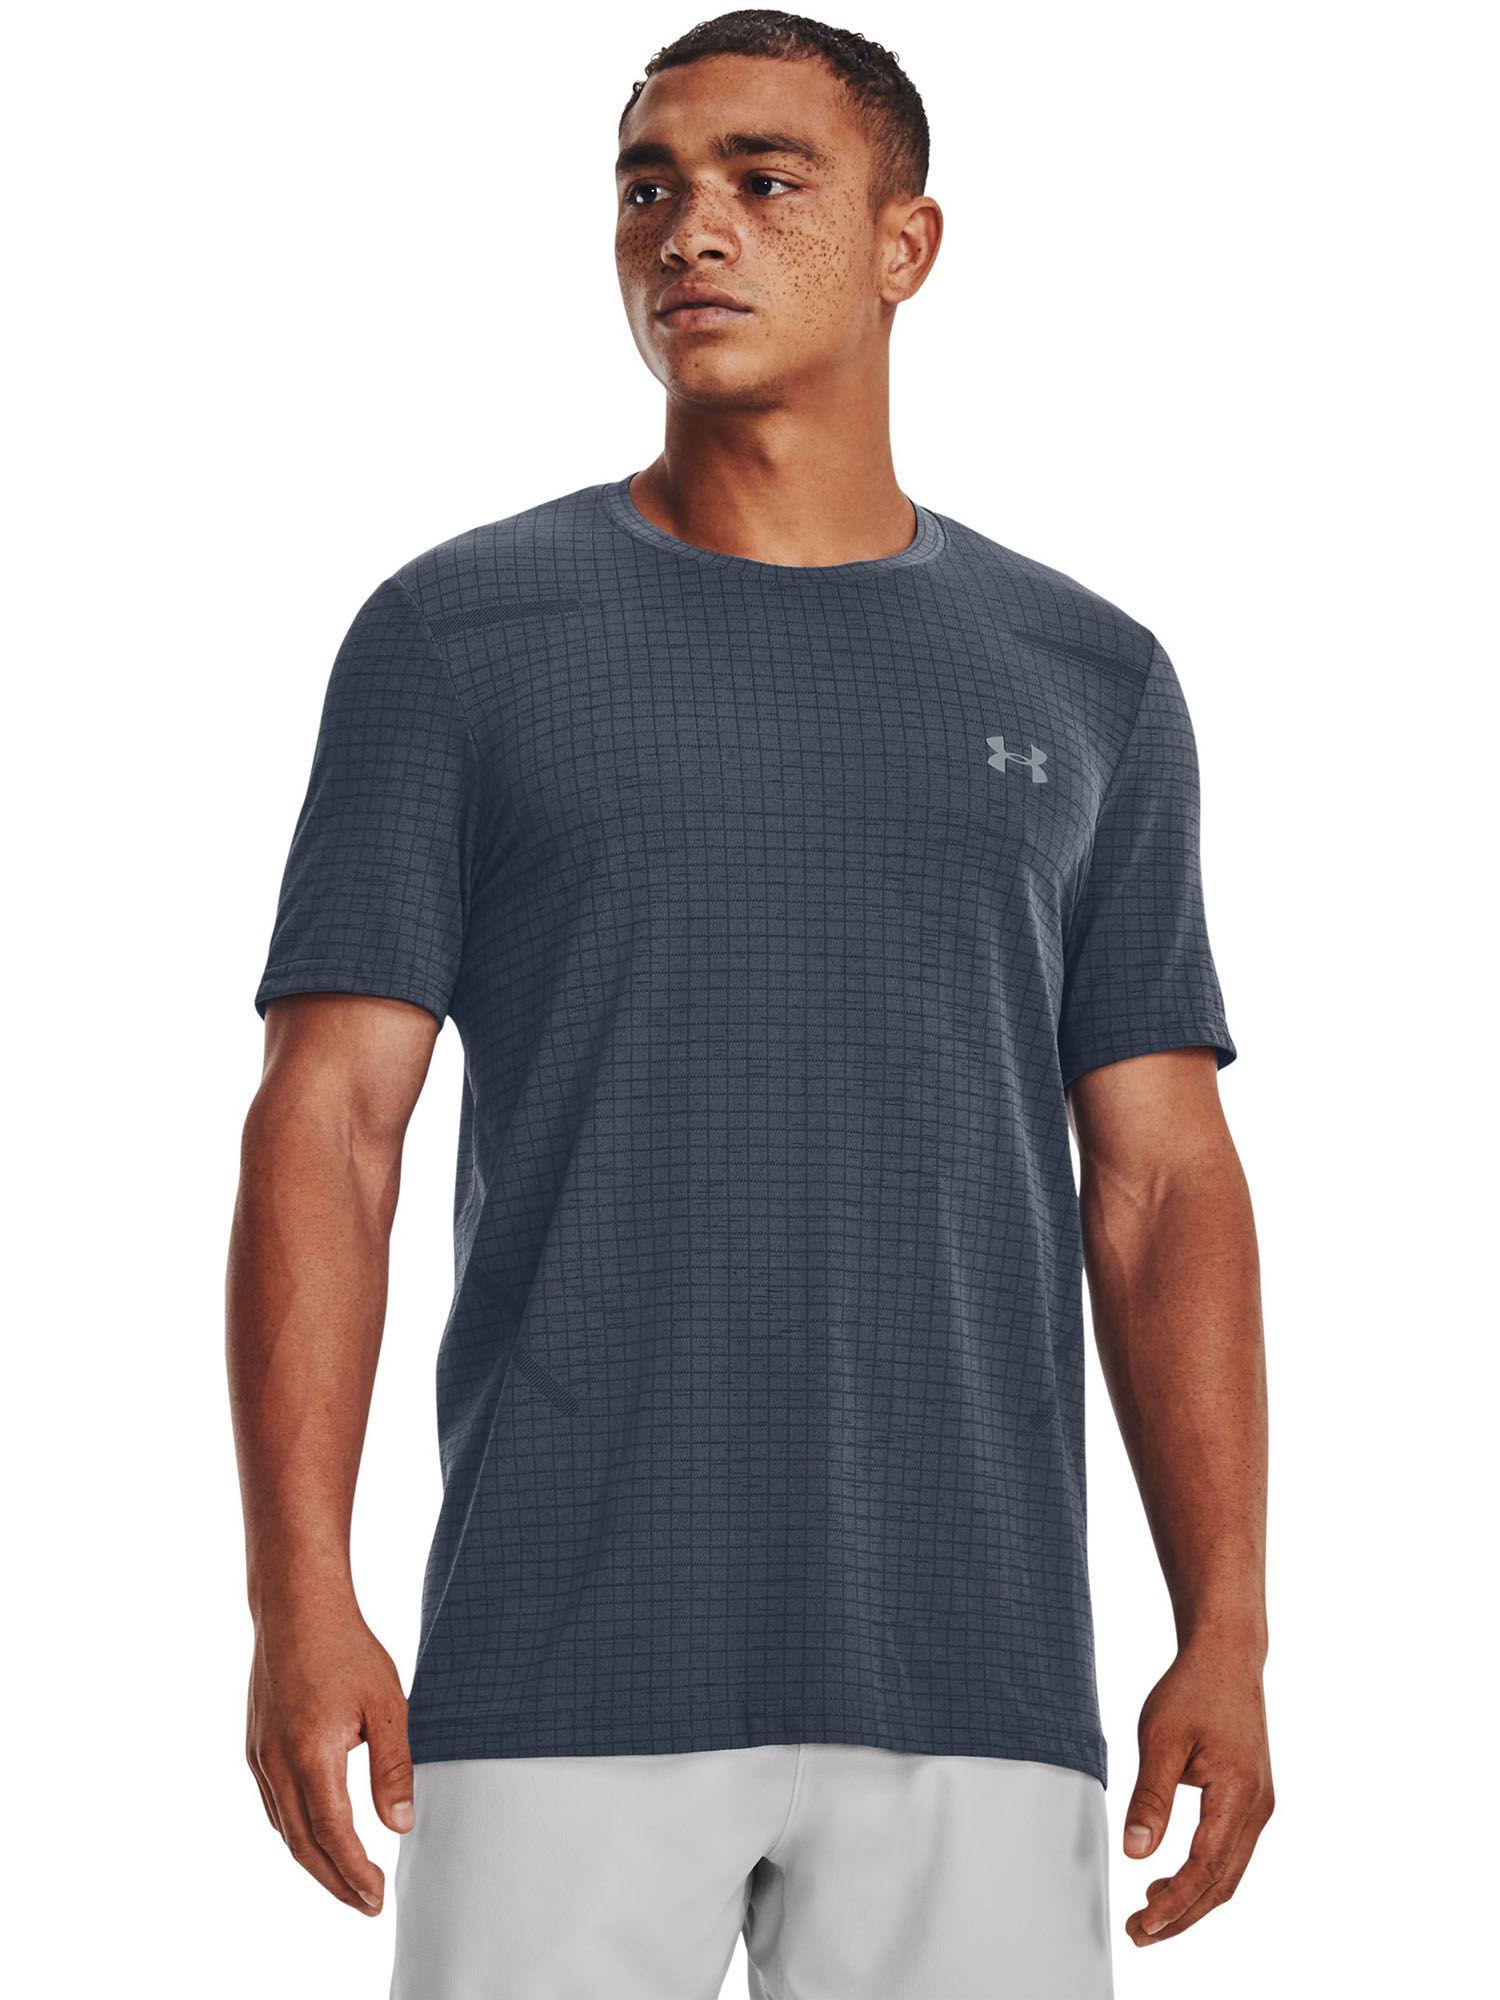 grey seamless grid short sleeve t-shirt